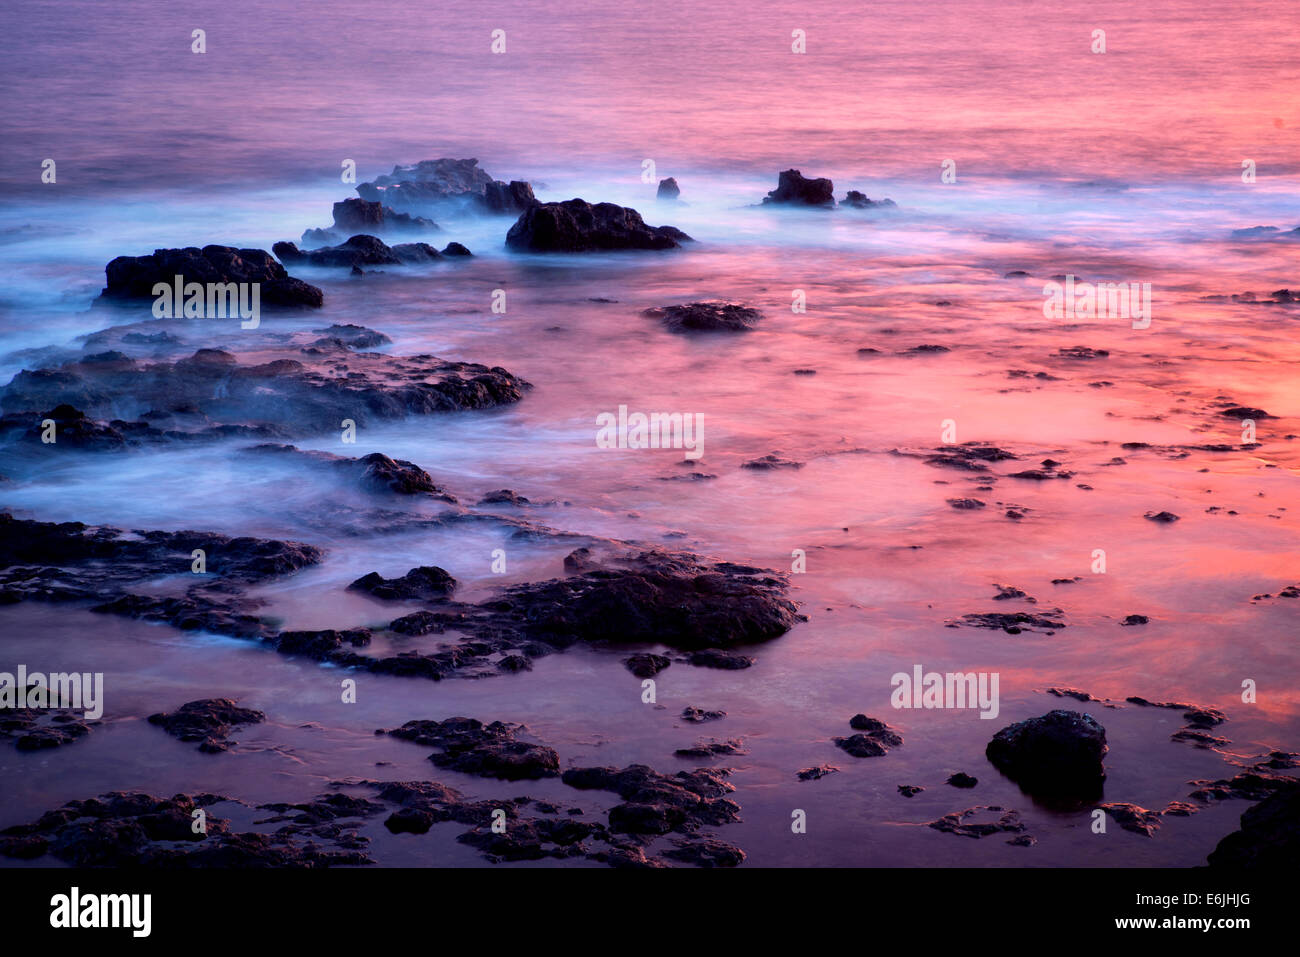 Sunset reflection at low tide. Lanai, Hawaii. Stock Photo